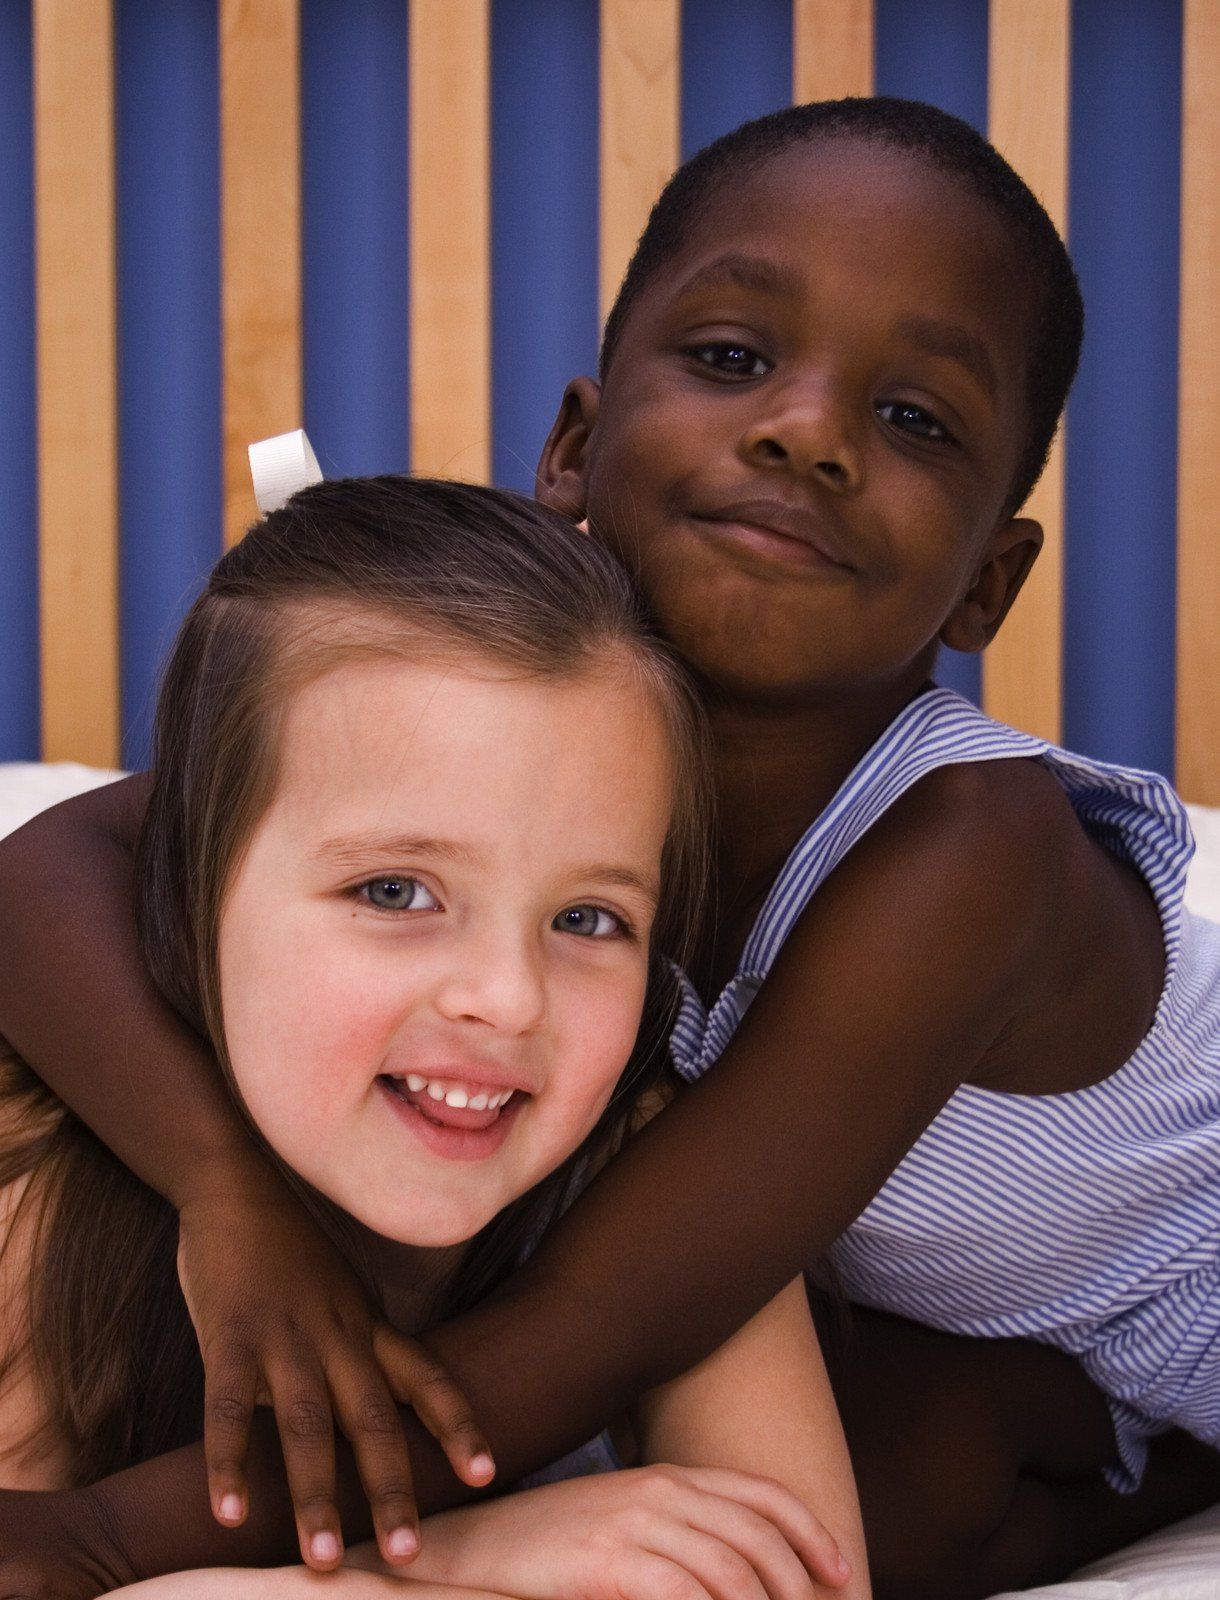 Nightcap reccomend Laws regarding interracial adoption